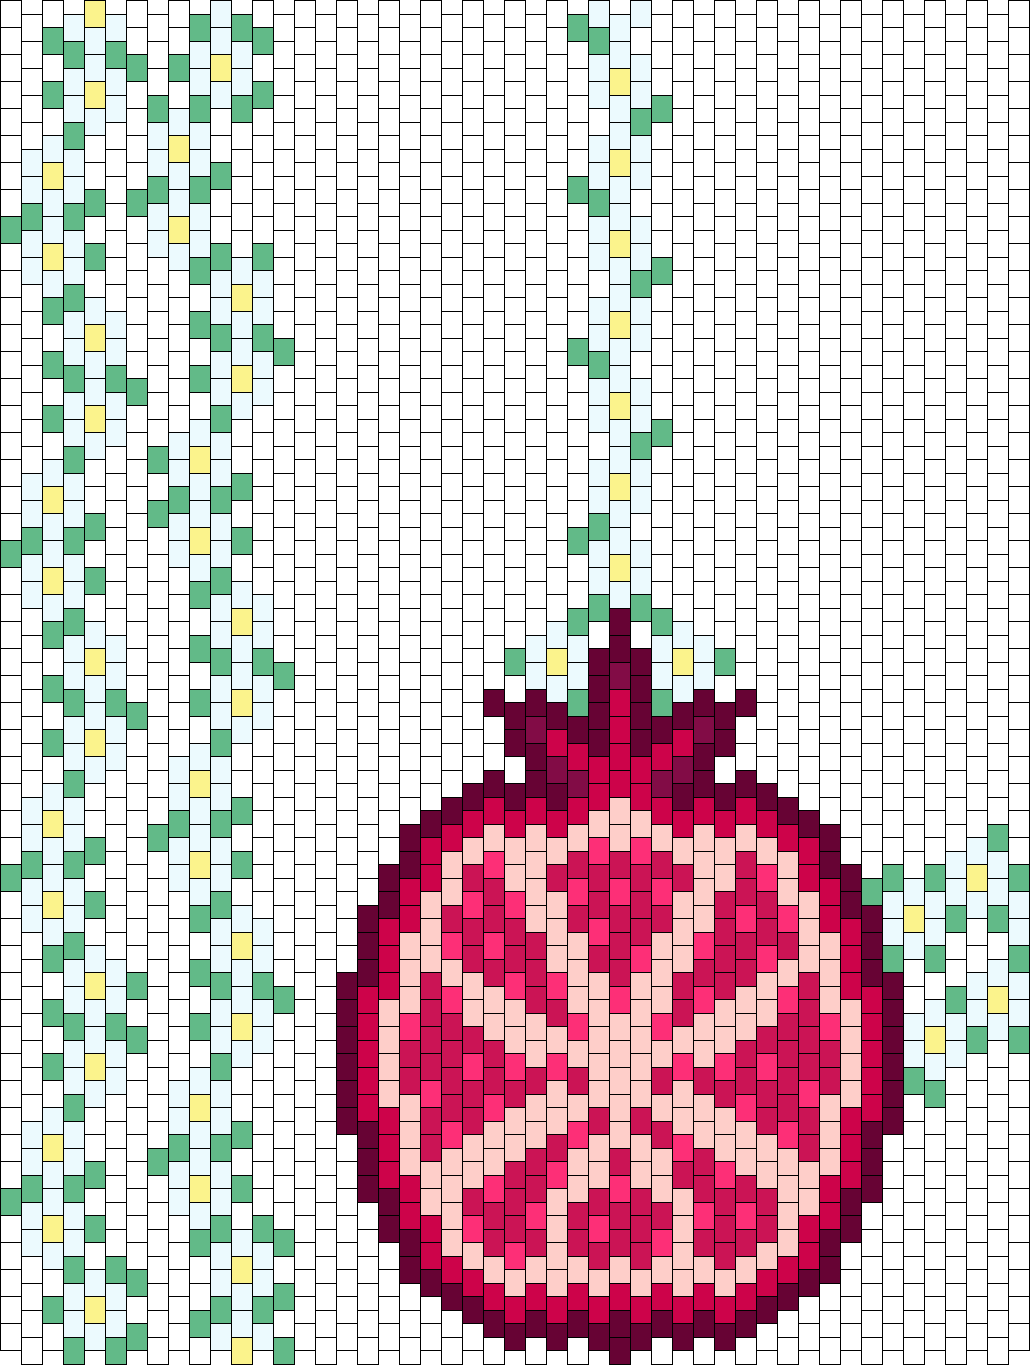 Pomegranate Bra and Daisy Chain Straps